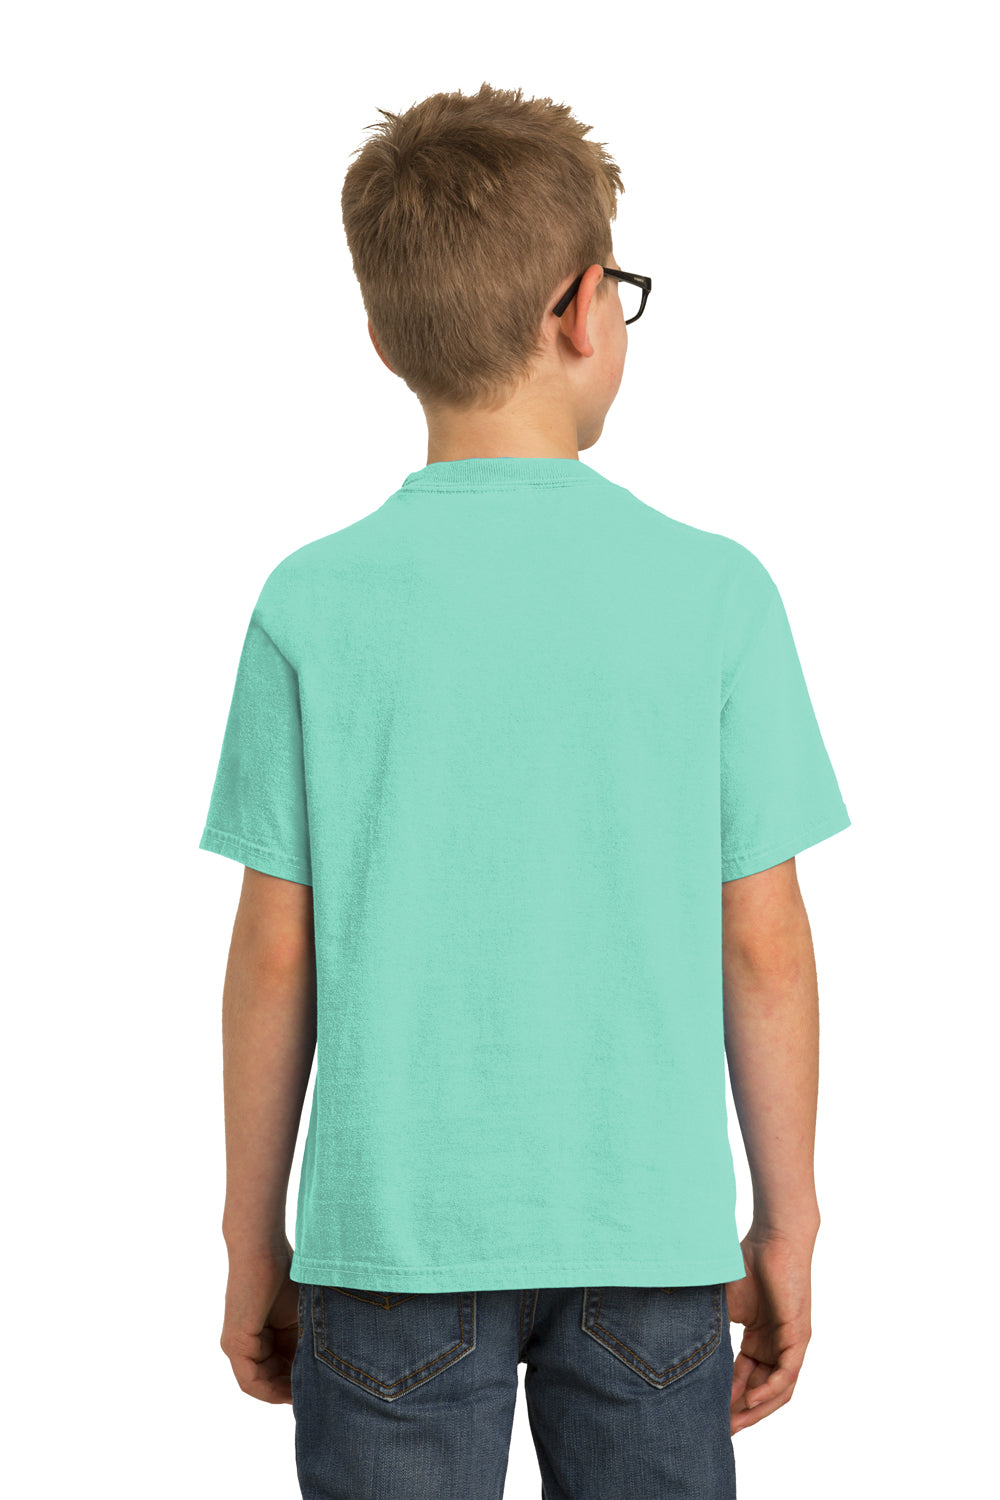 Port & Company Youth Beach Wash Short Sleeve Crewneck T-Shirt Cool Mint Green Back